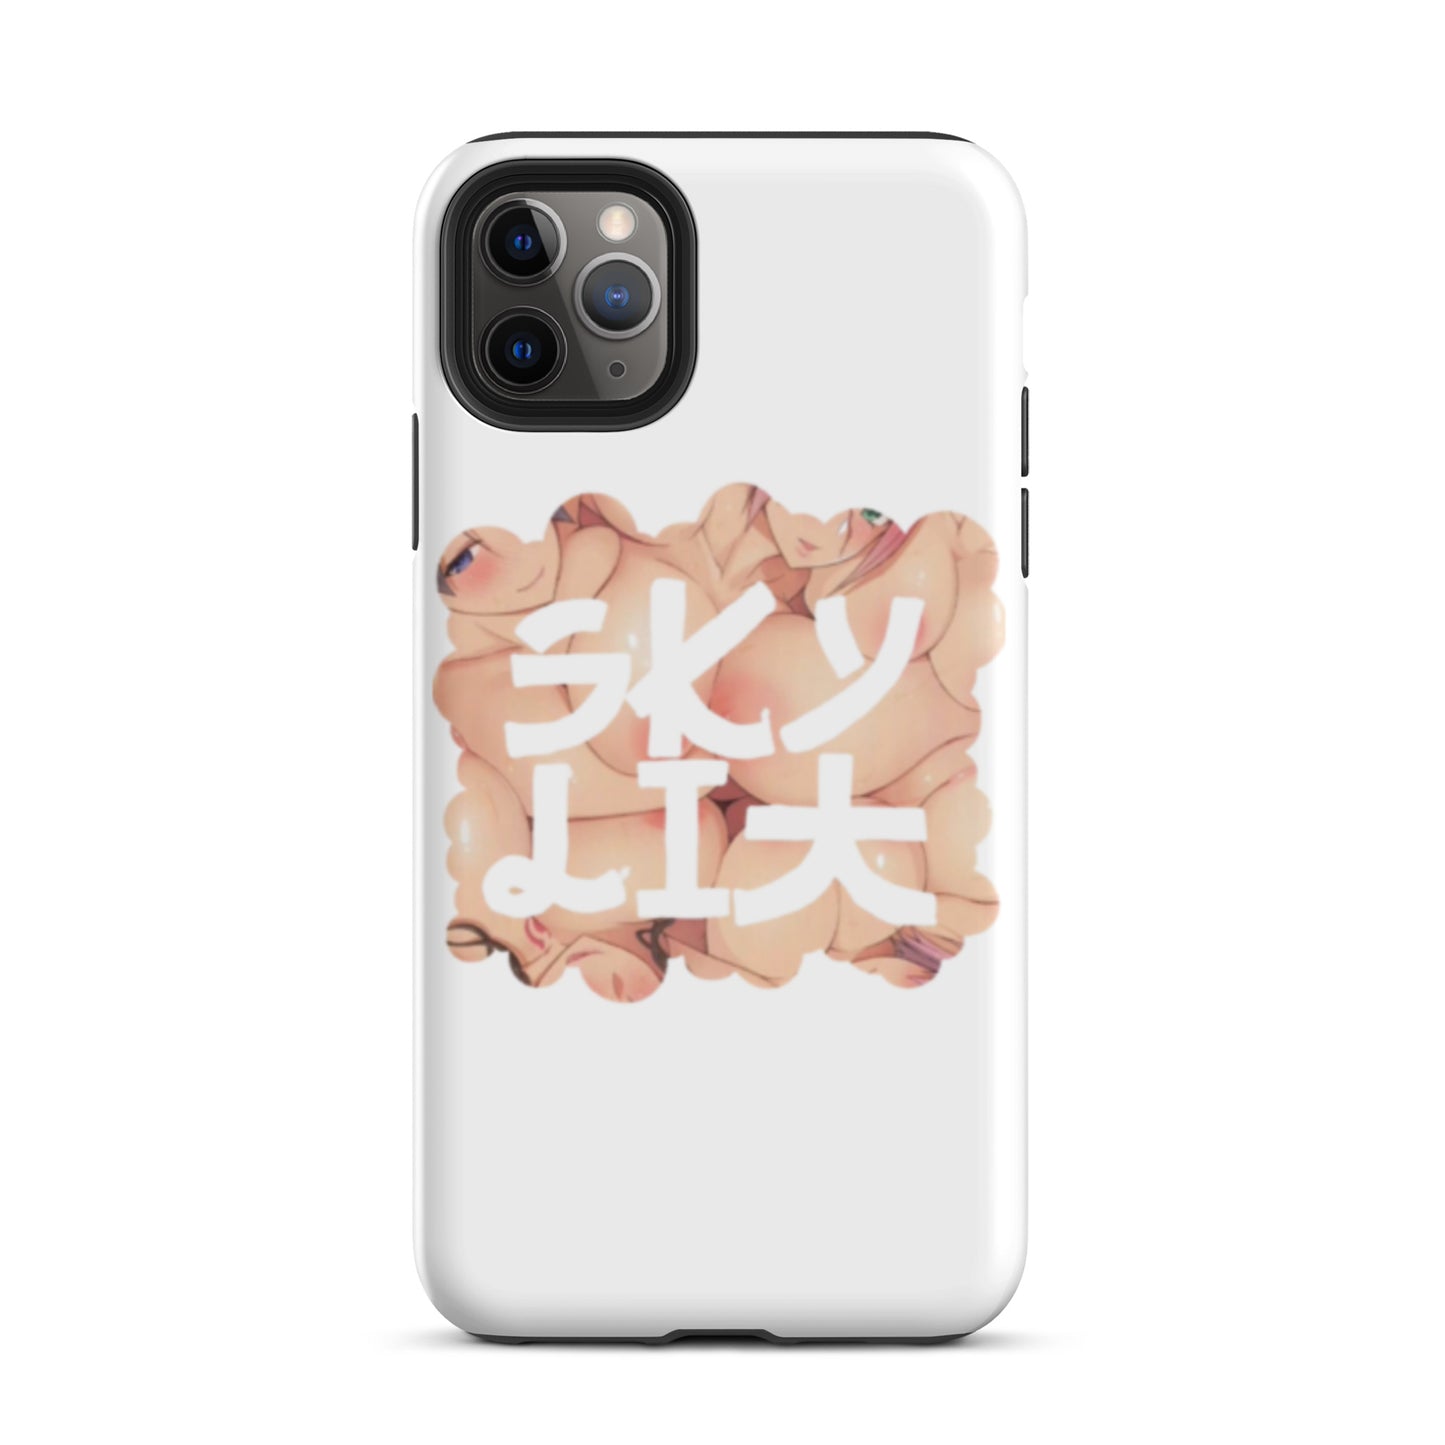 Skylit Anime Tough iPhone case